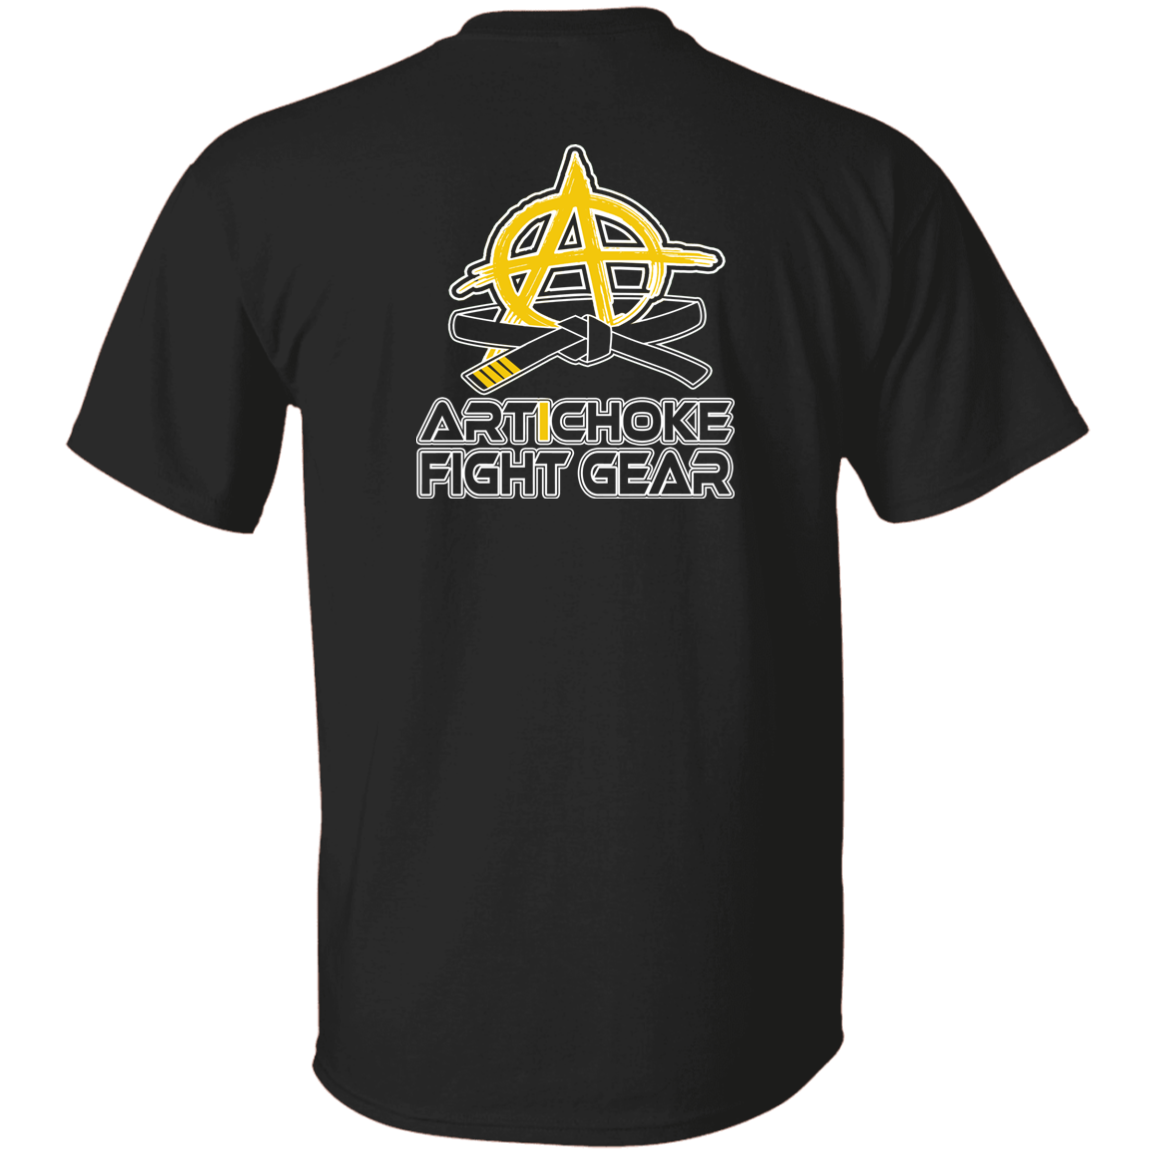 Artichoke Fight Gear Custom Design #8. ArtichokeUSArmbar. US Army Parody. Men's 100% Cotton T-Shirt